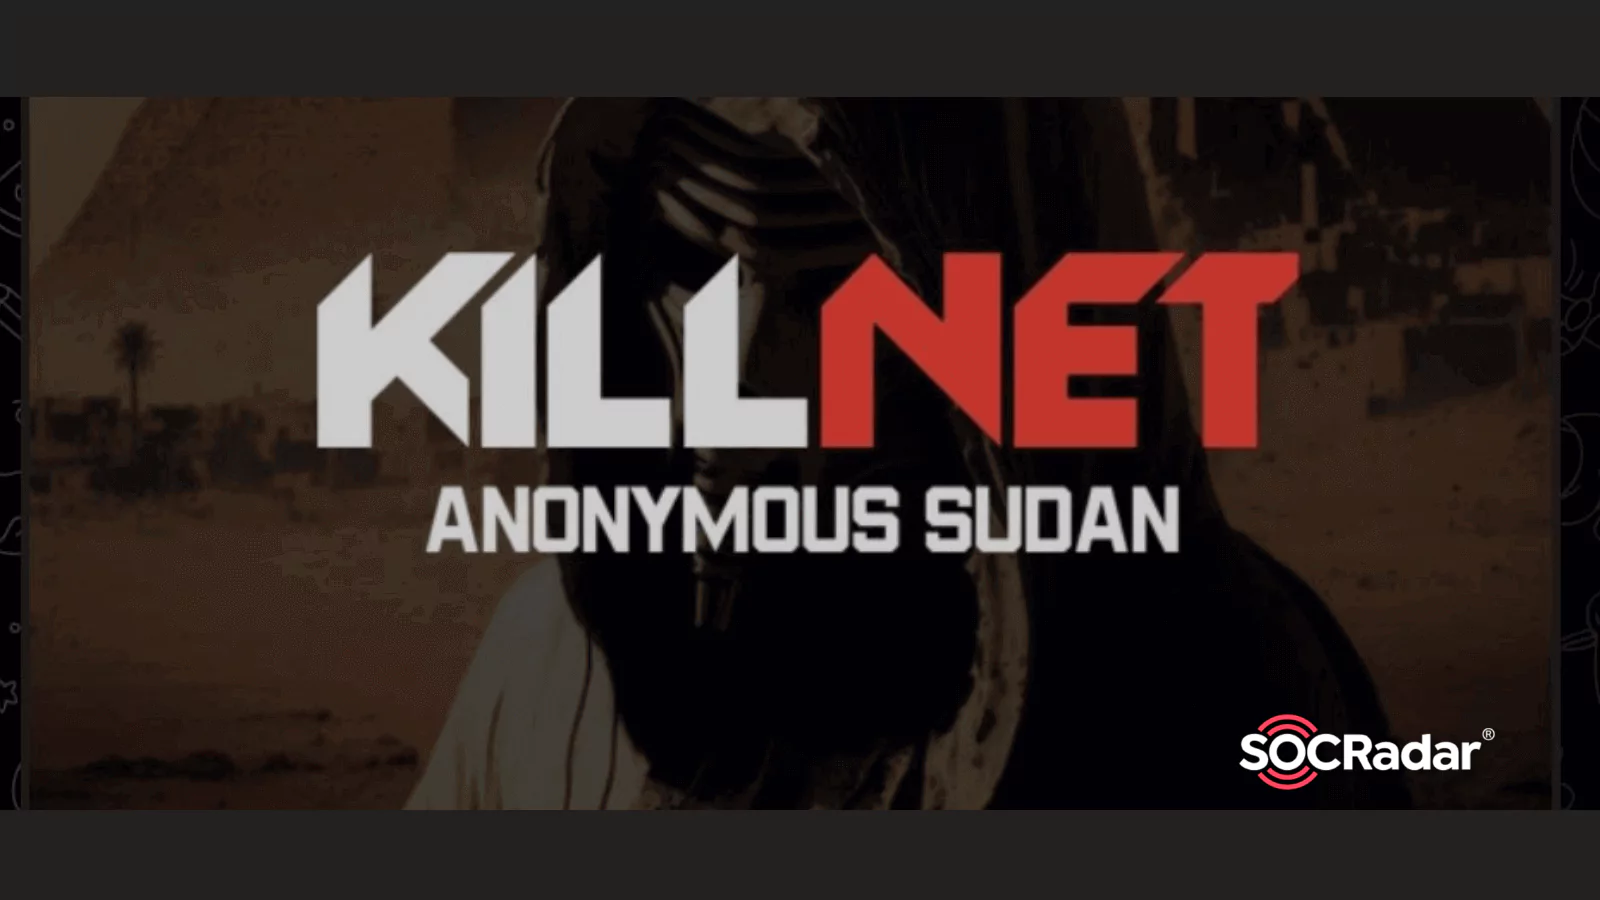 SOCRadar® Cyber Intelligence Inc. | Hacktivism on the Rise: KillNet Anonymous Sudan's Cyber Campaign Targets Australia